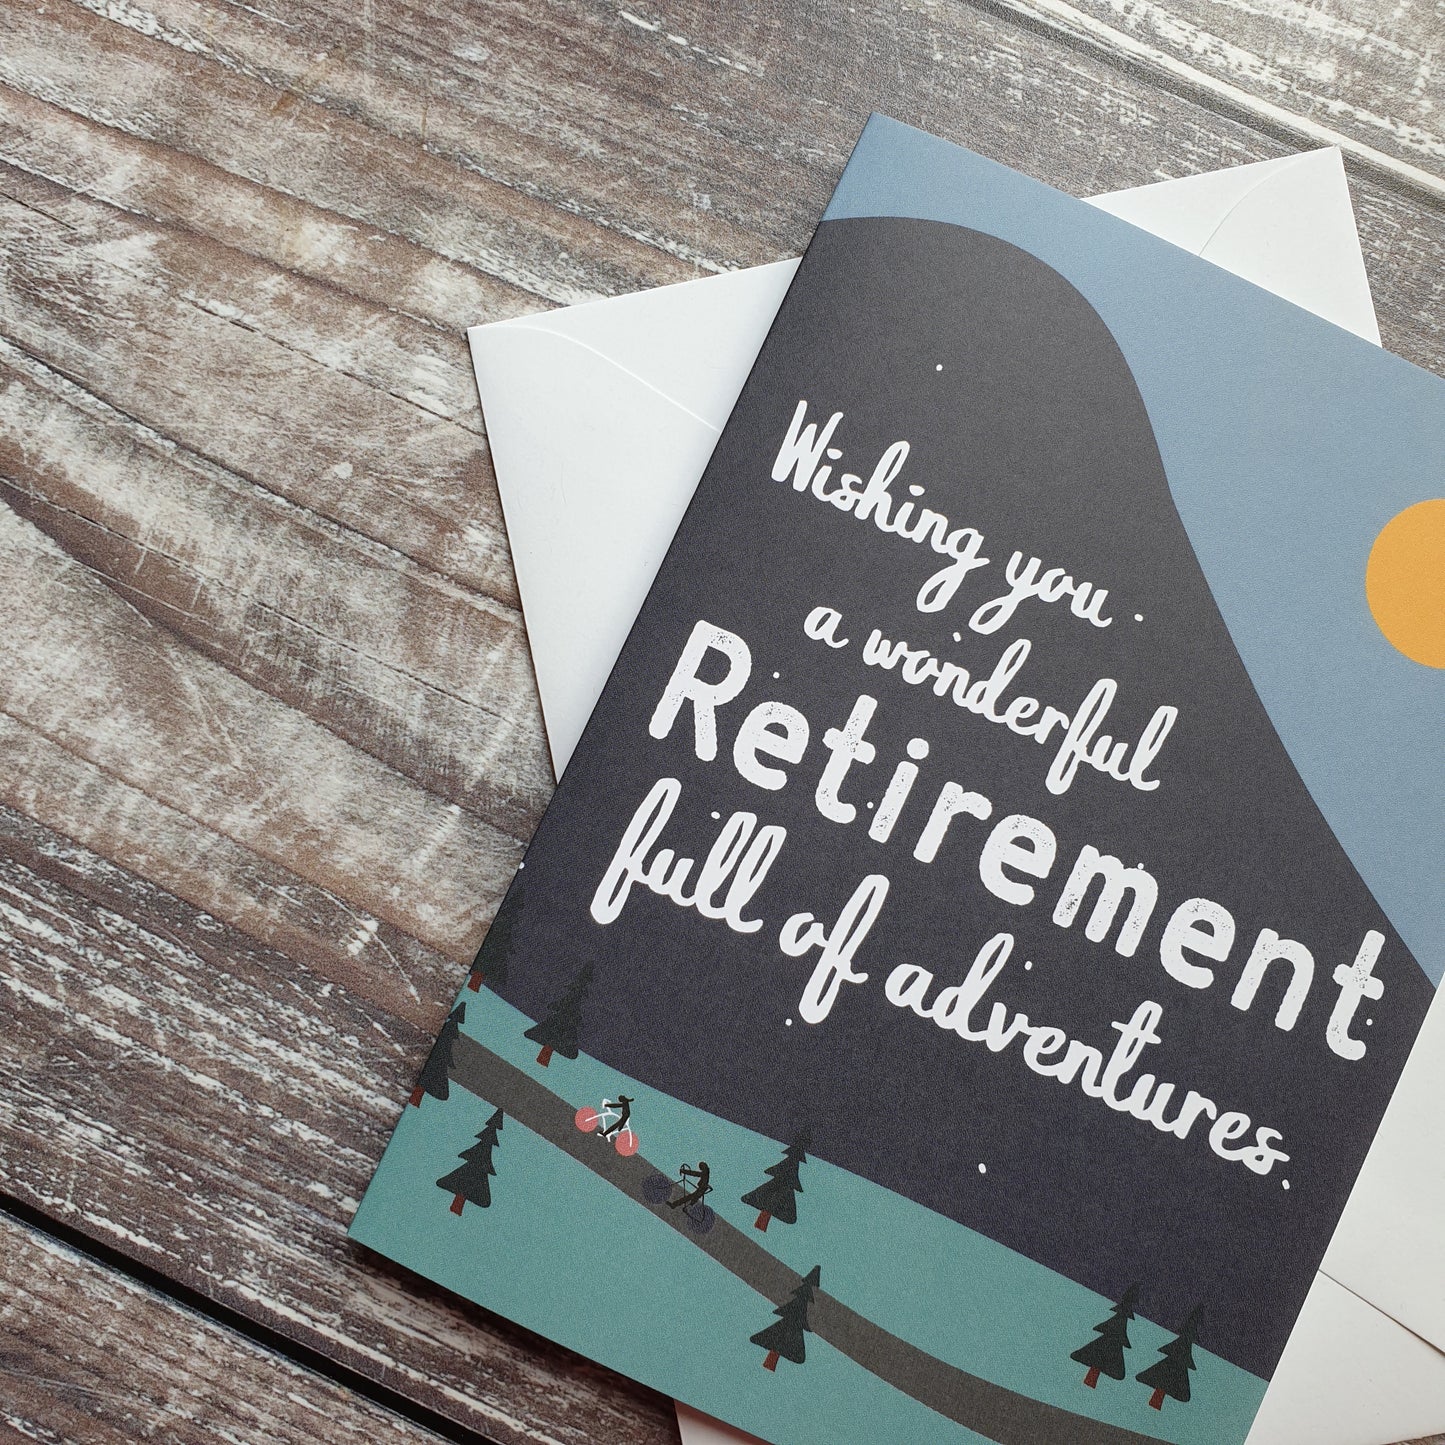 Retirement Greeting Card